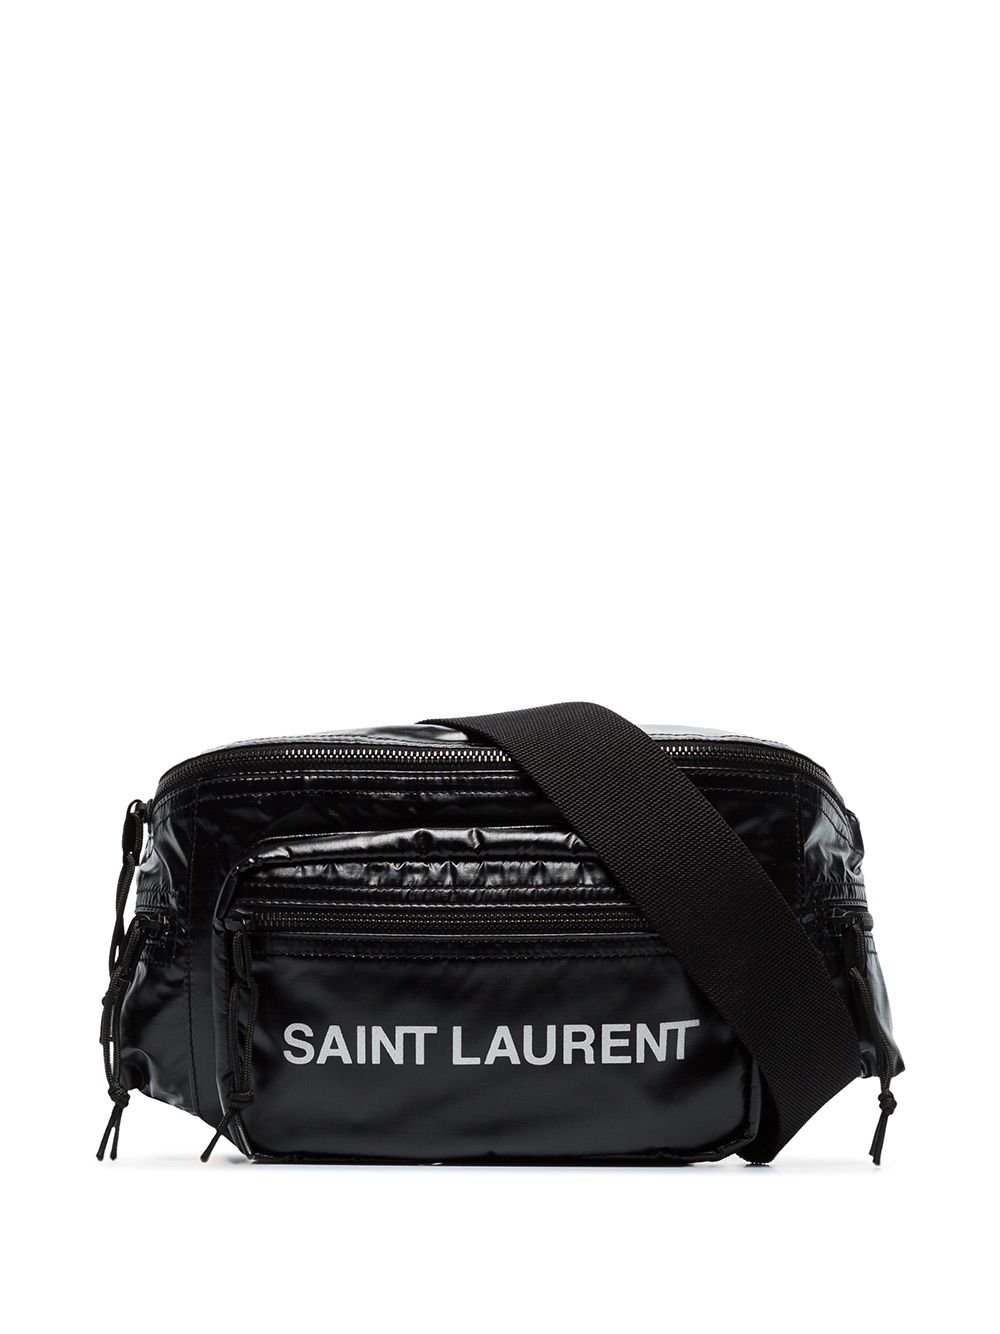 Imagen 1 de Saint Laurent cangurera estilo bolsa crossbody con cierre